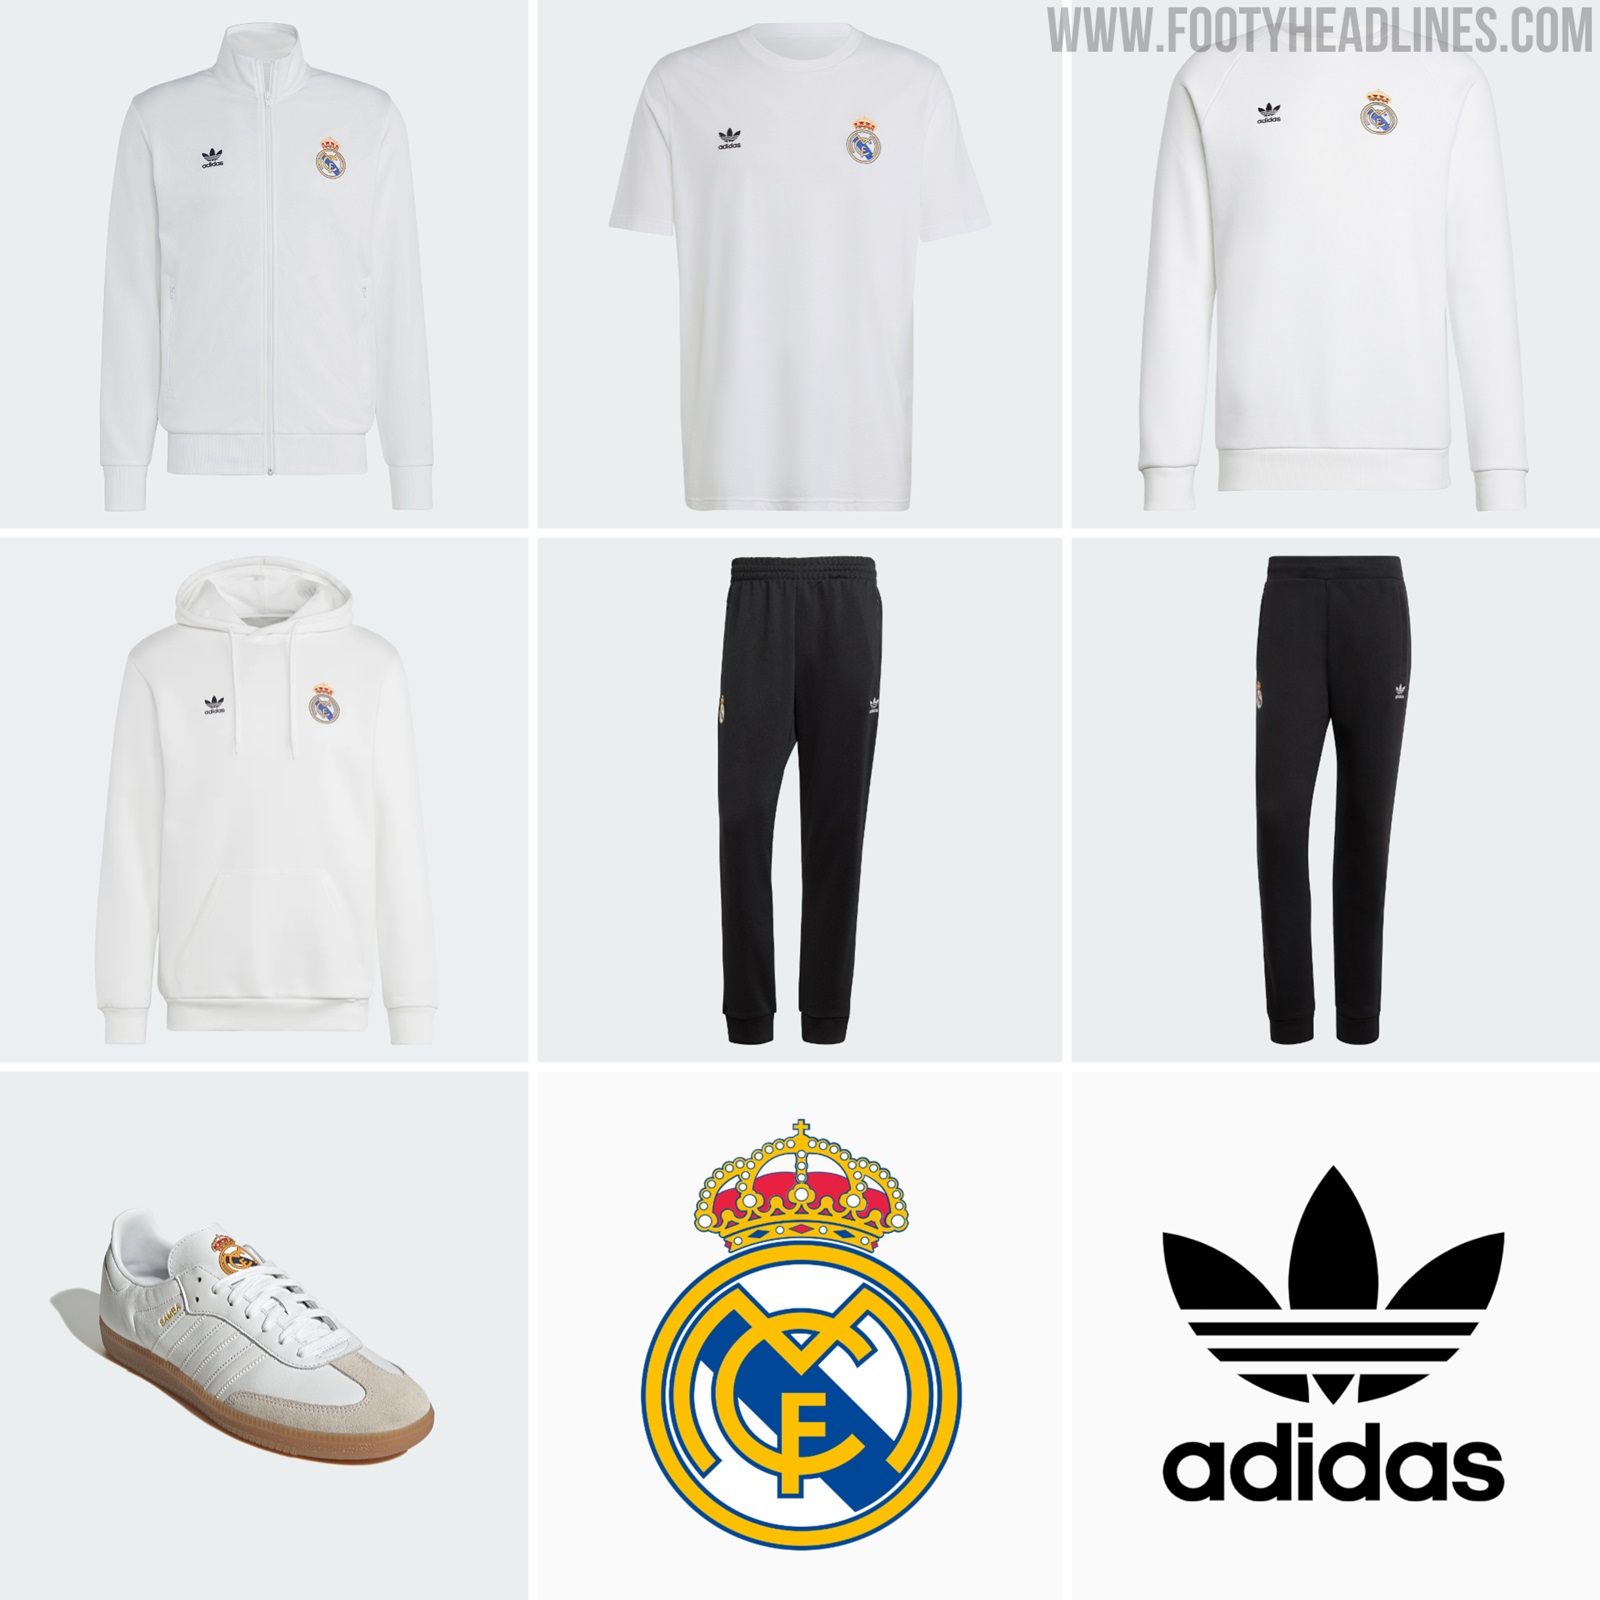 Adidas Originals Madrid 22-23 Essentials Collection Released - Footy Headlines